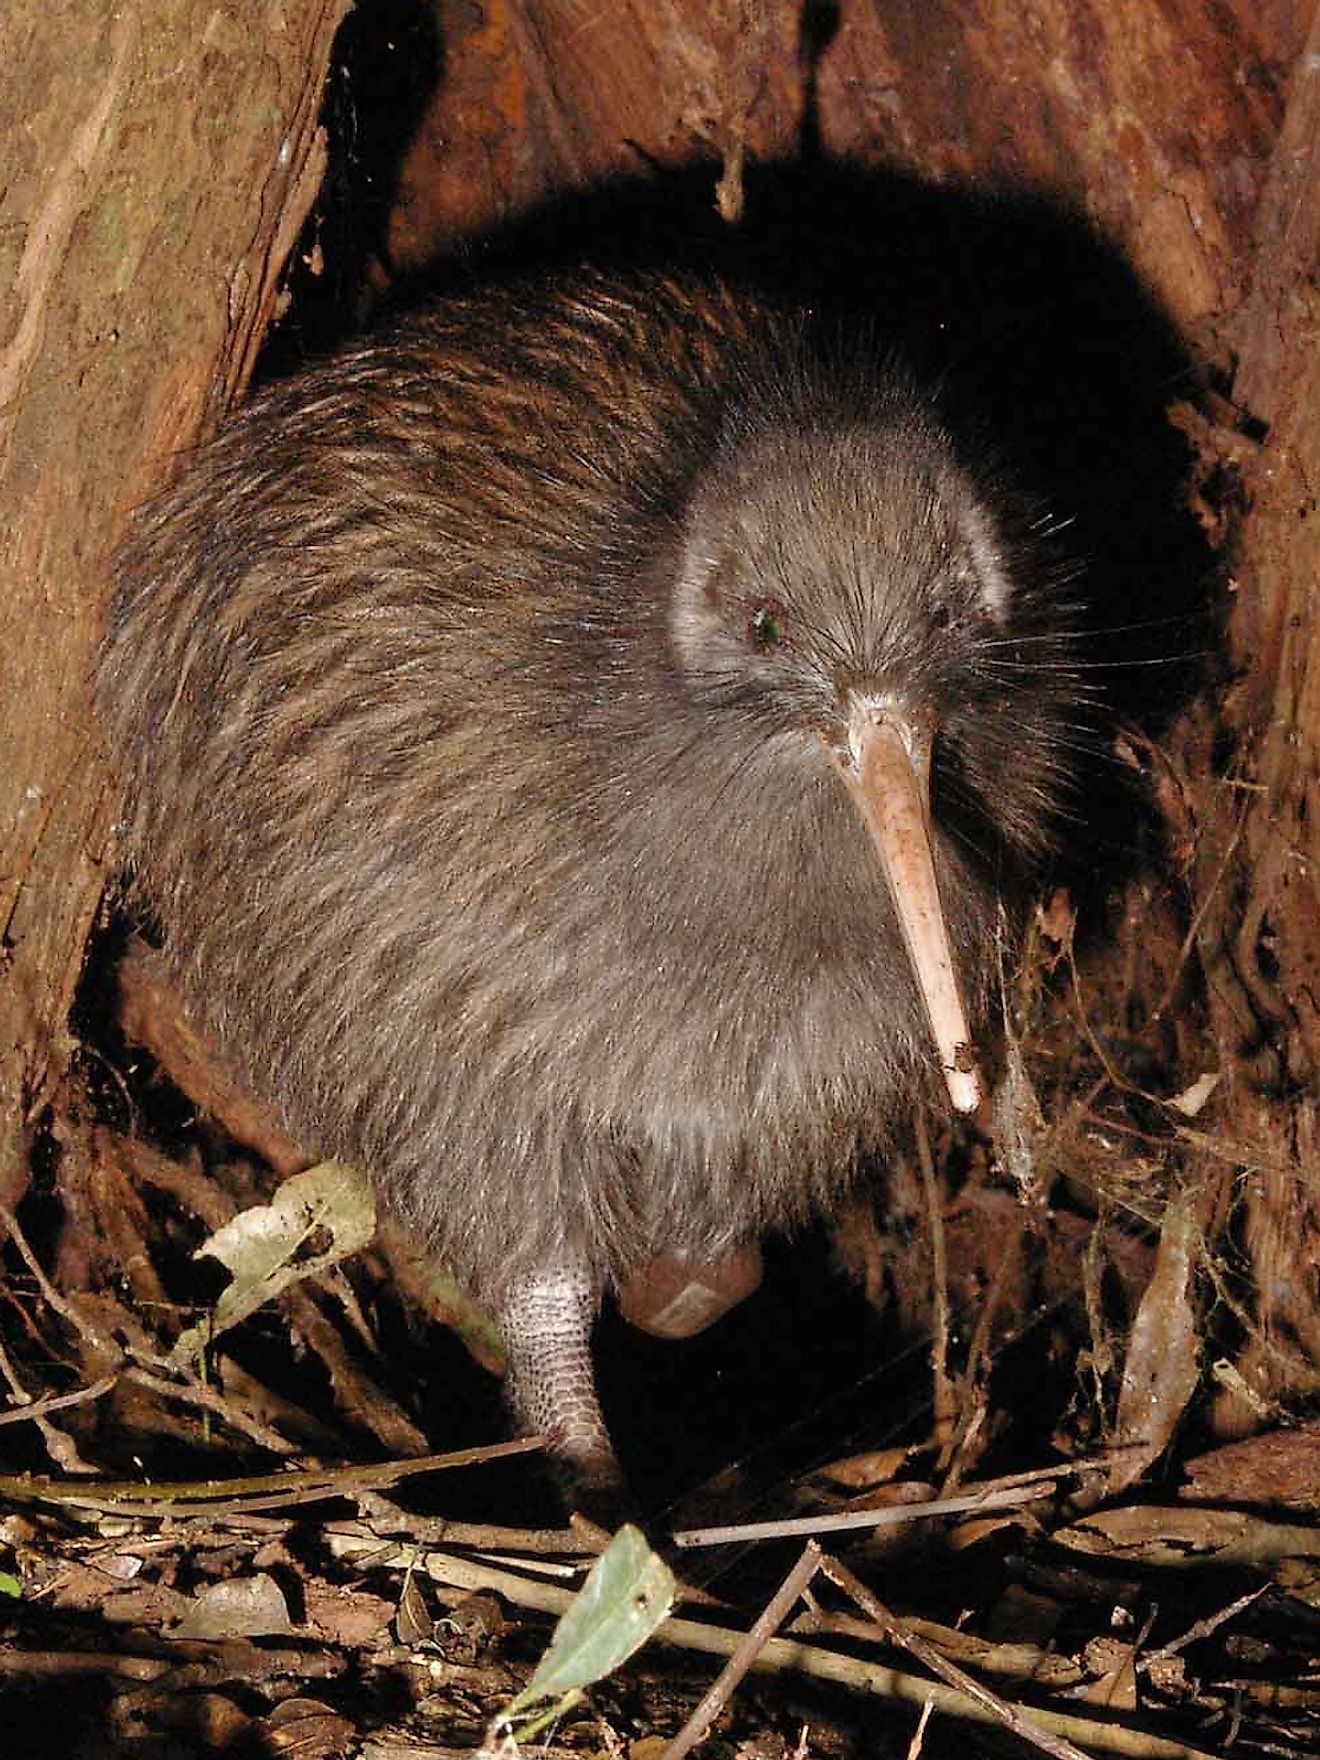 North Island brown kiwi. Image credit: Maungatautari Ecological Island Trust/Public domain